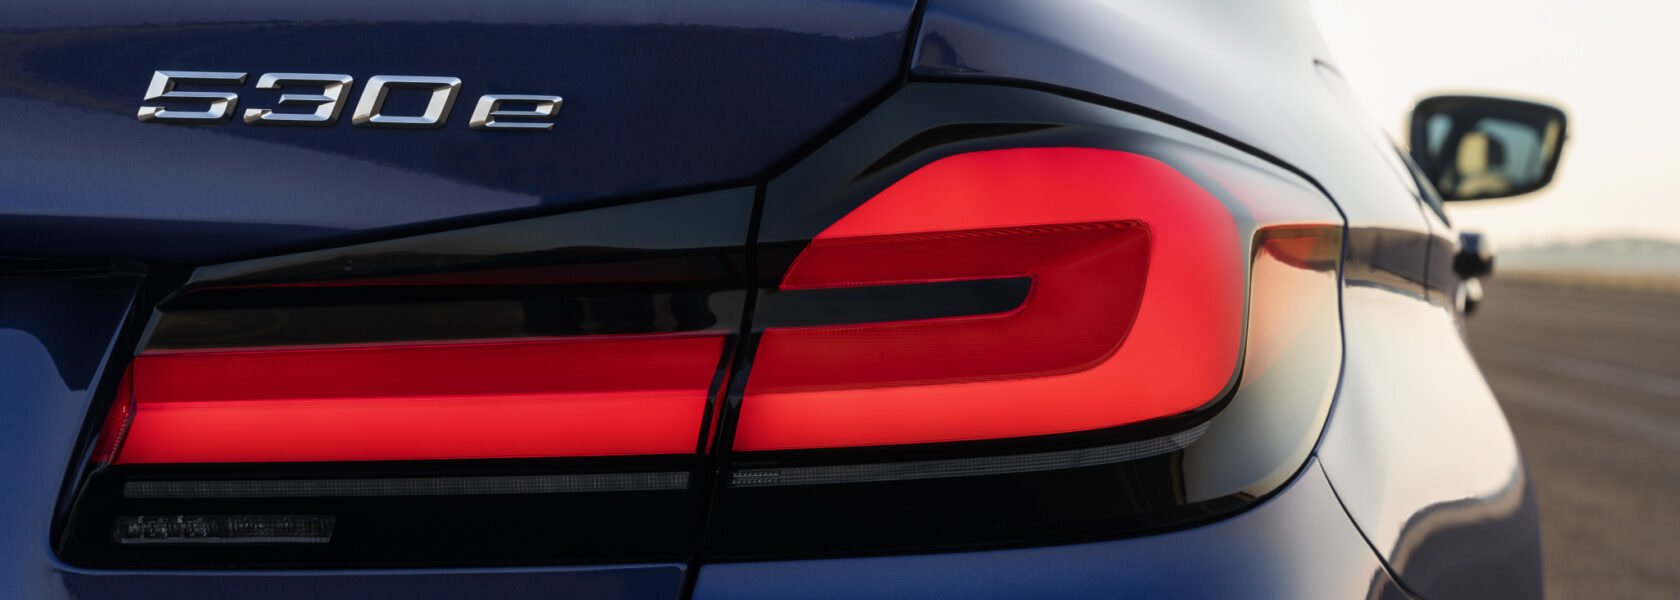 BMW Série 5 G30 LCI 2020 feu arrière